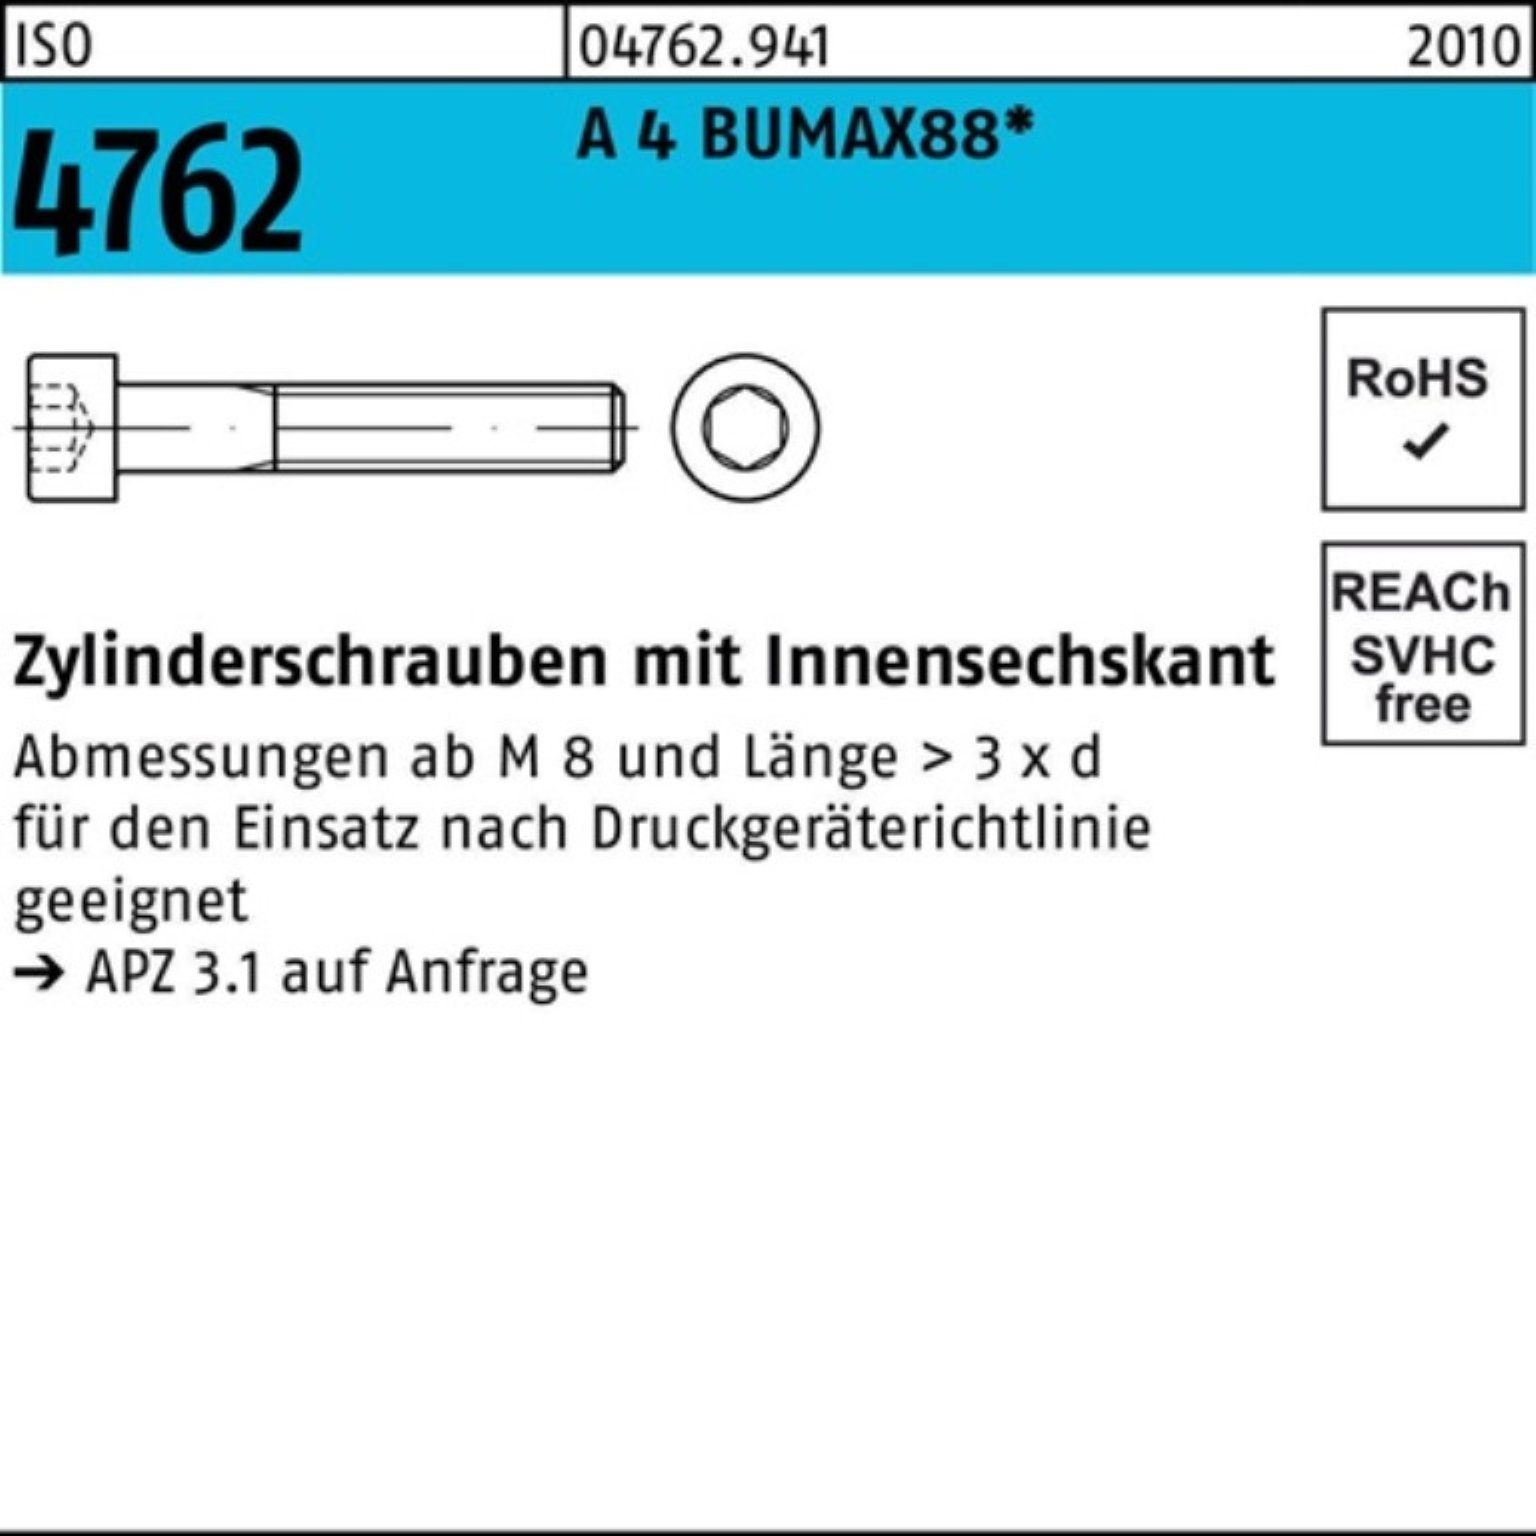 50 Zylinderschraube Innen-6kt 4 Pack BUMAX88 40 4762 Zylinderschraube ISO A 100er Bufab M10x